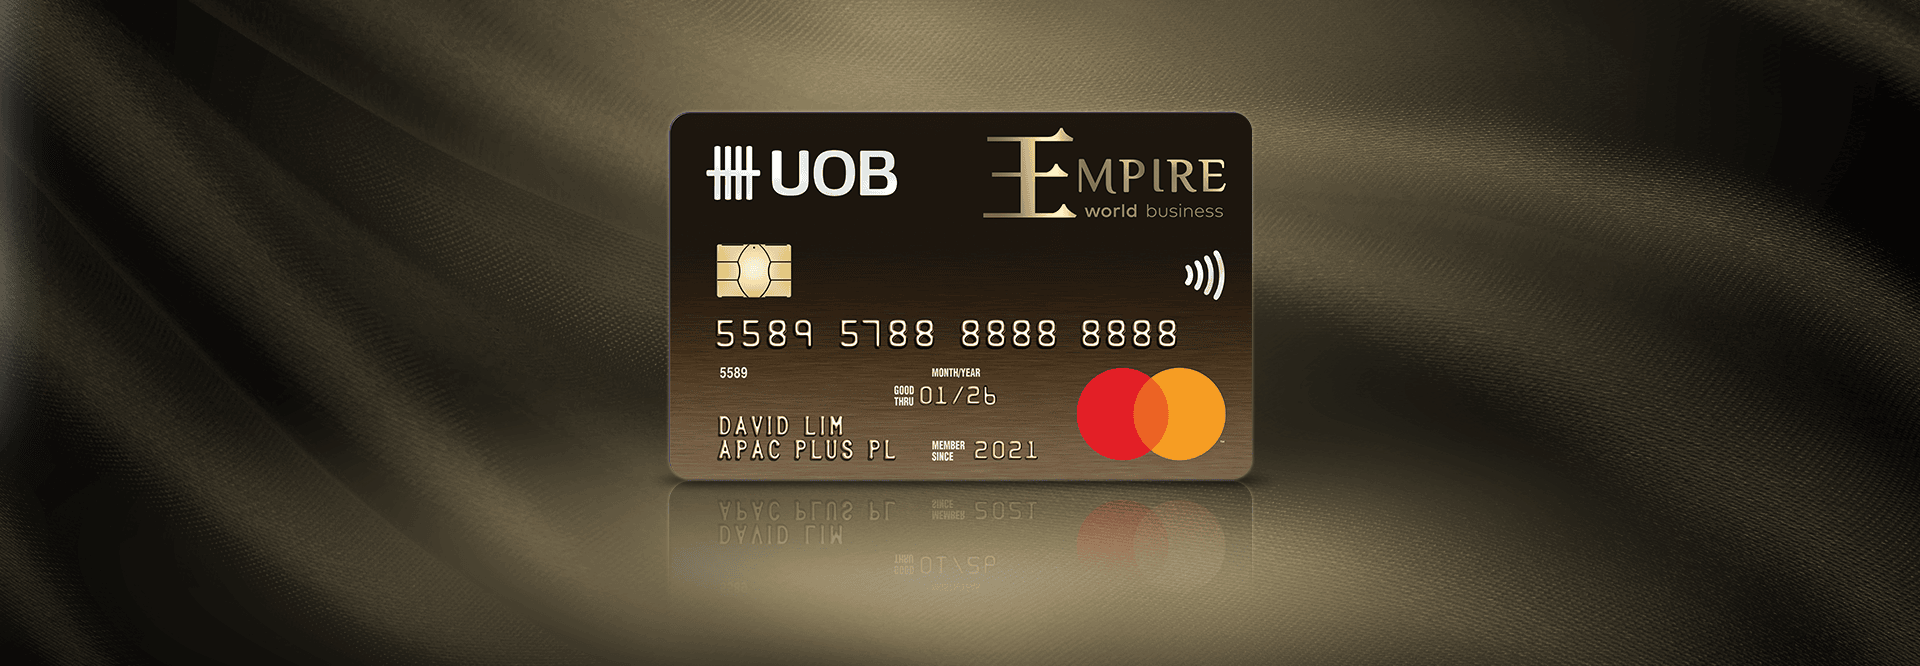 UOB Empire World Business Mastercard®